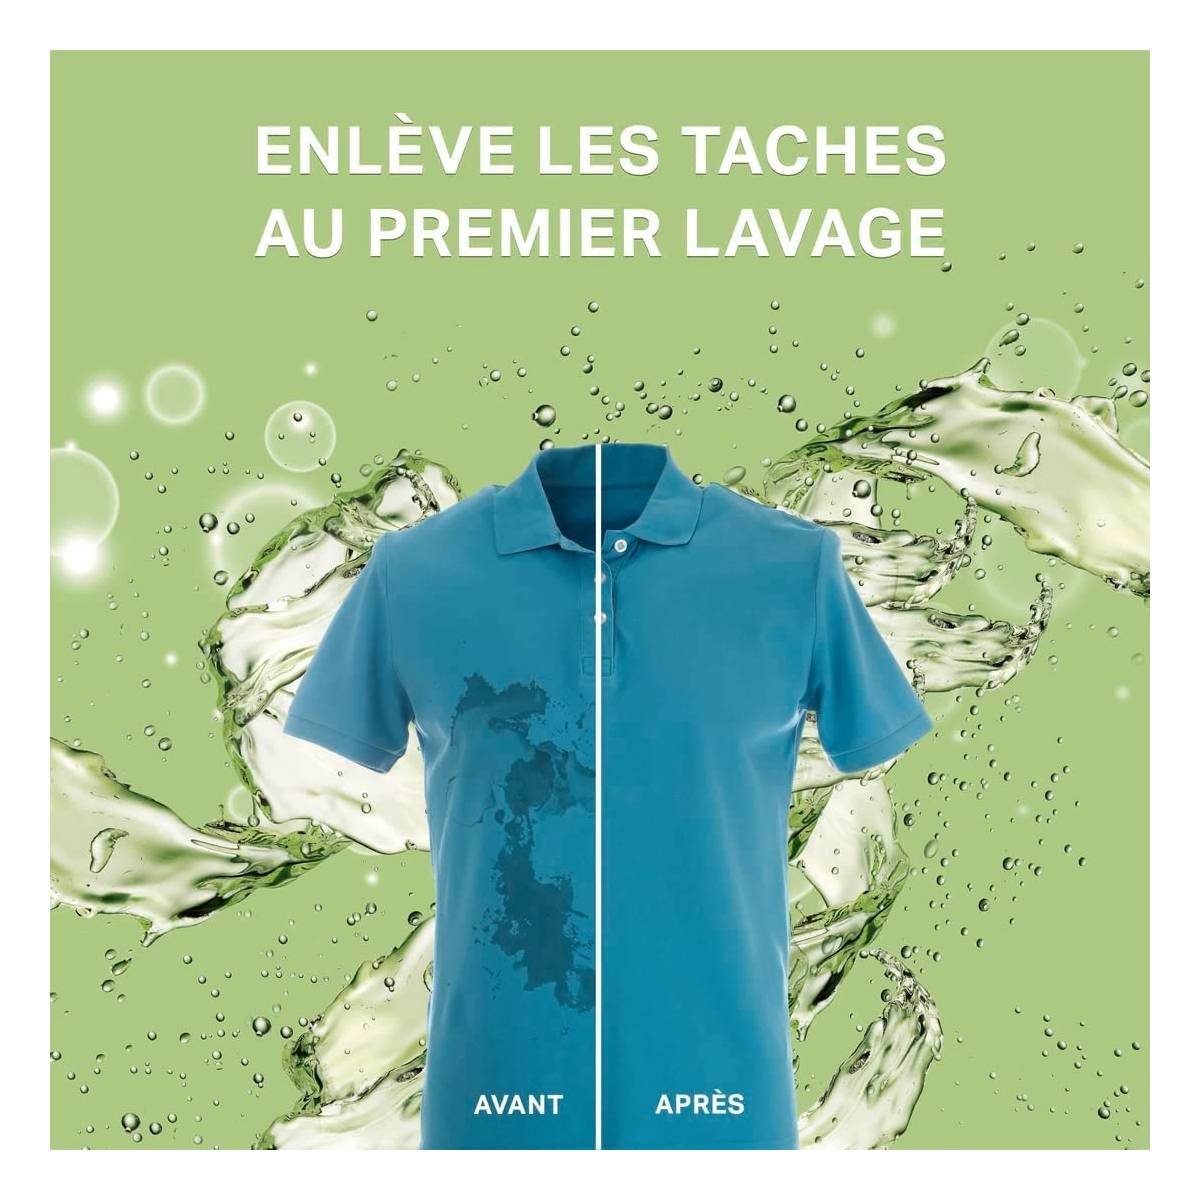 Liquid detergent Skip sensitive 37 washes - France, New - The wholesale  platform